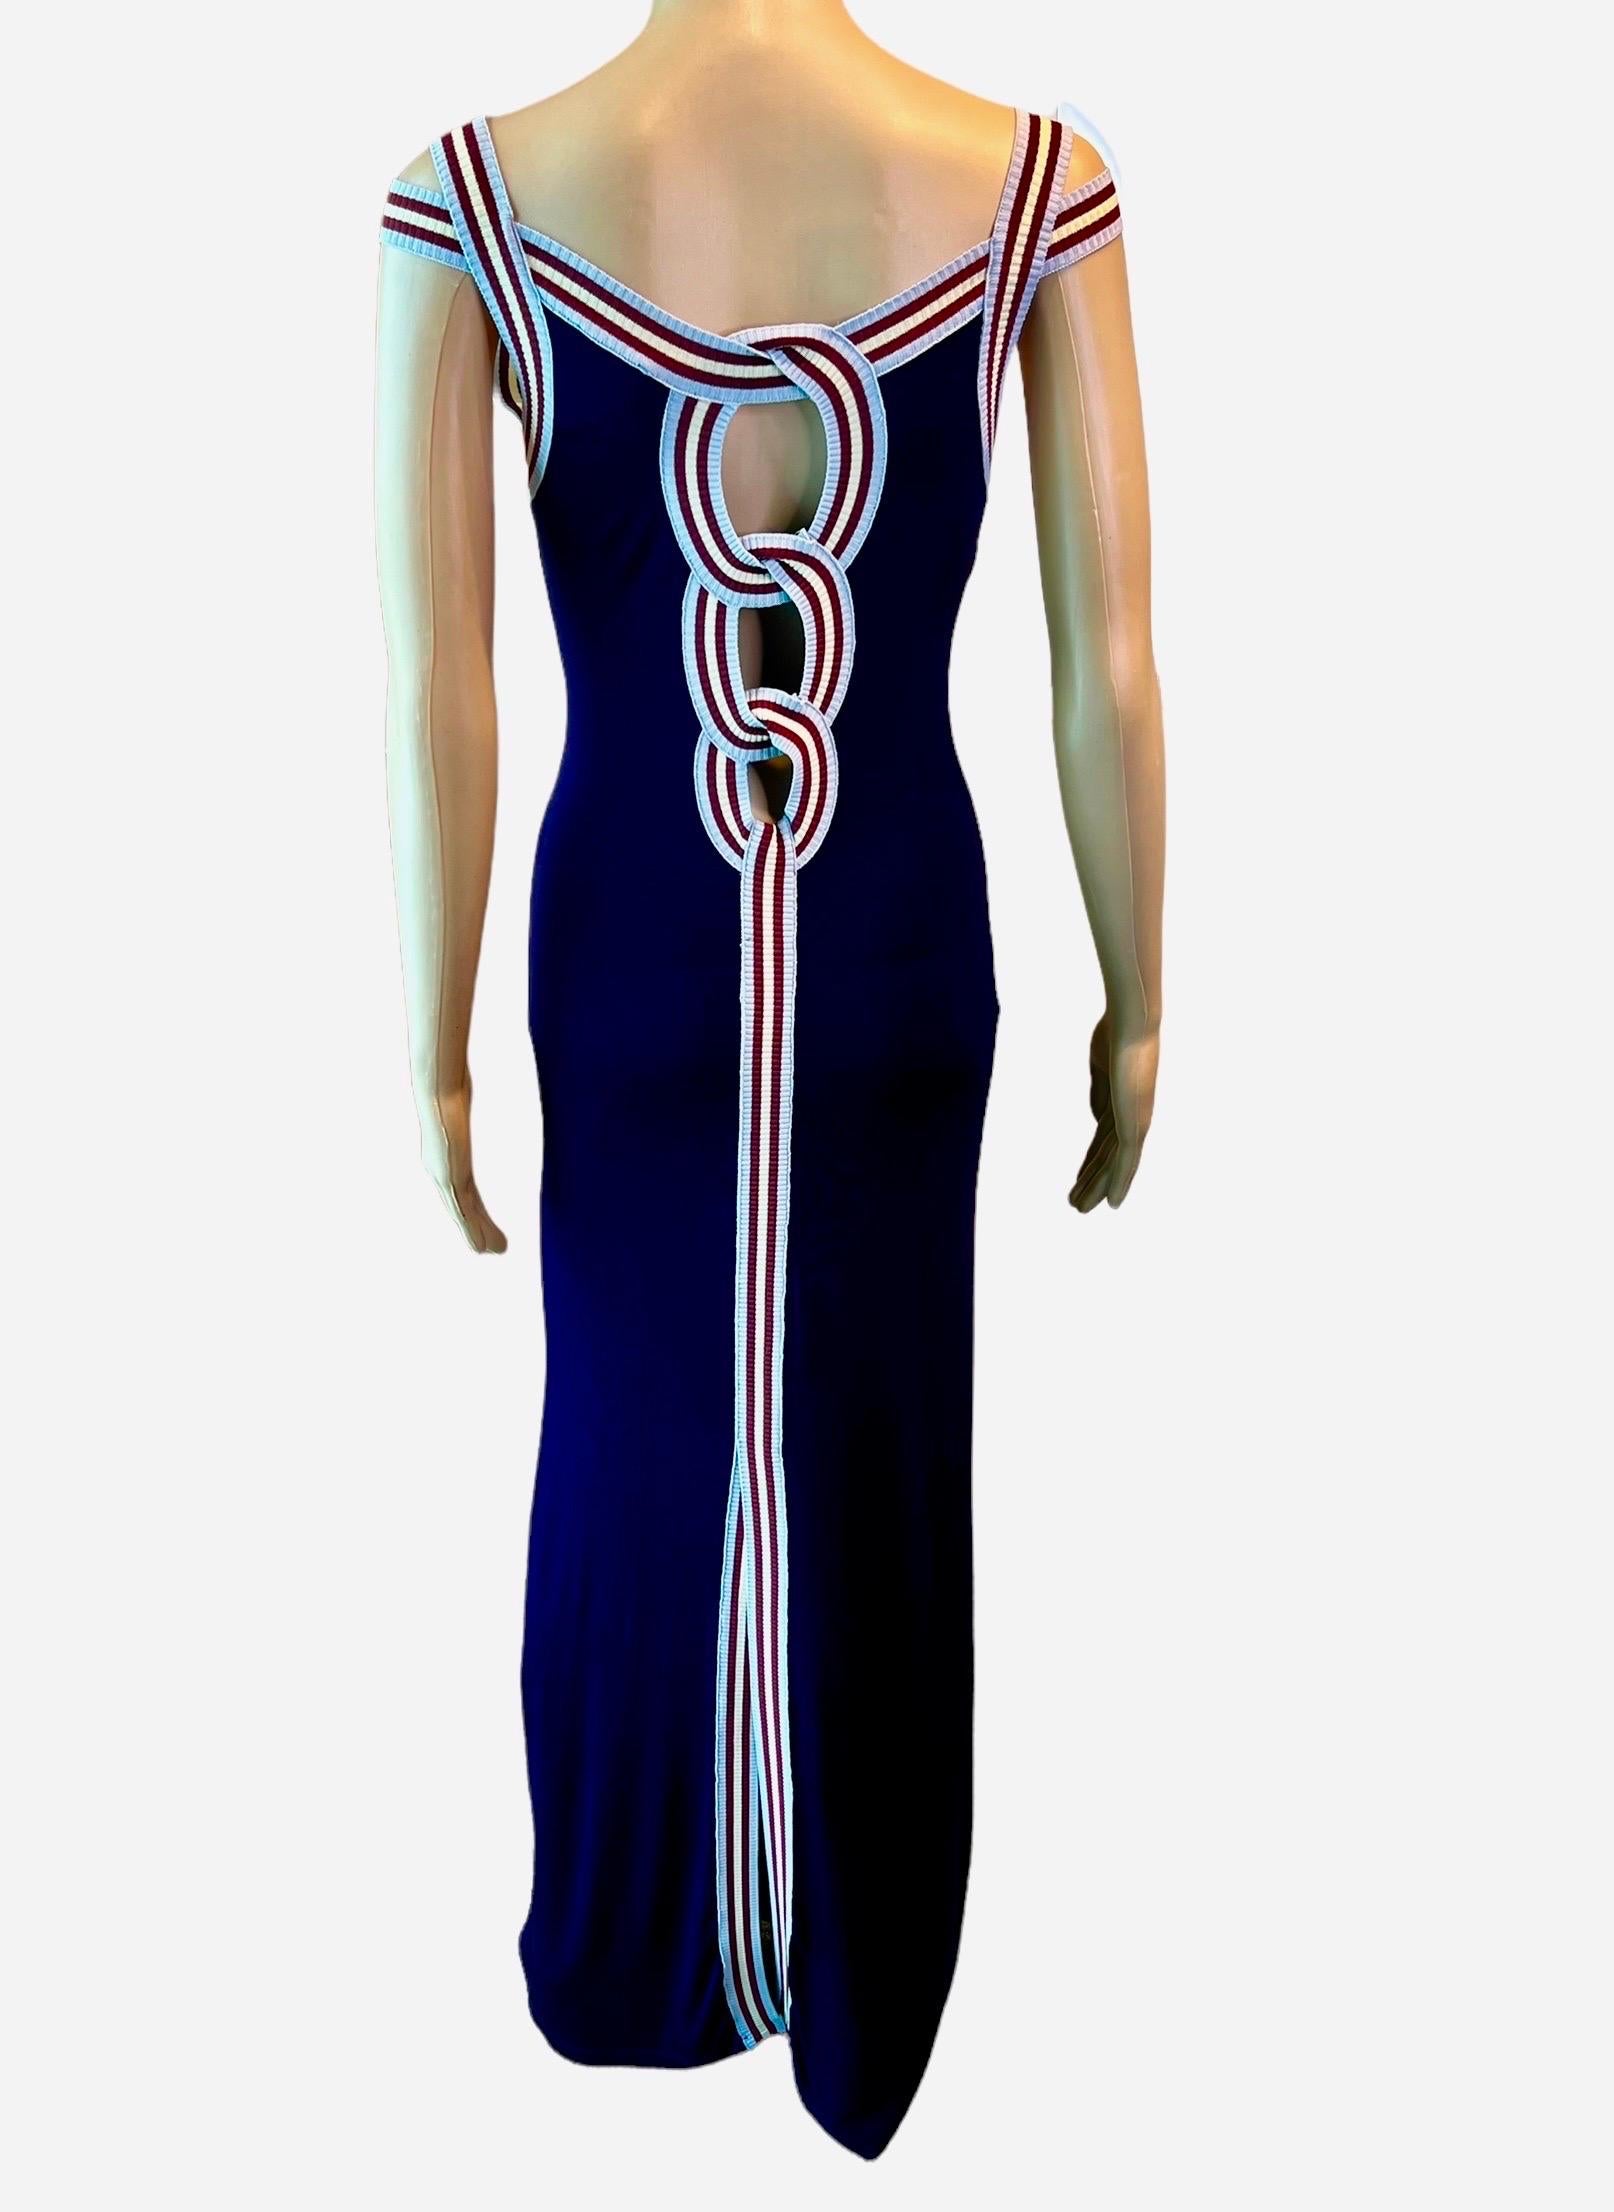 Jean Paul Gaultier S/S 2007 Cutout Bodycon Maxi Dress For Sale 2